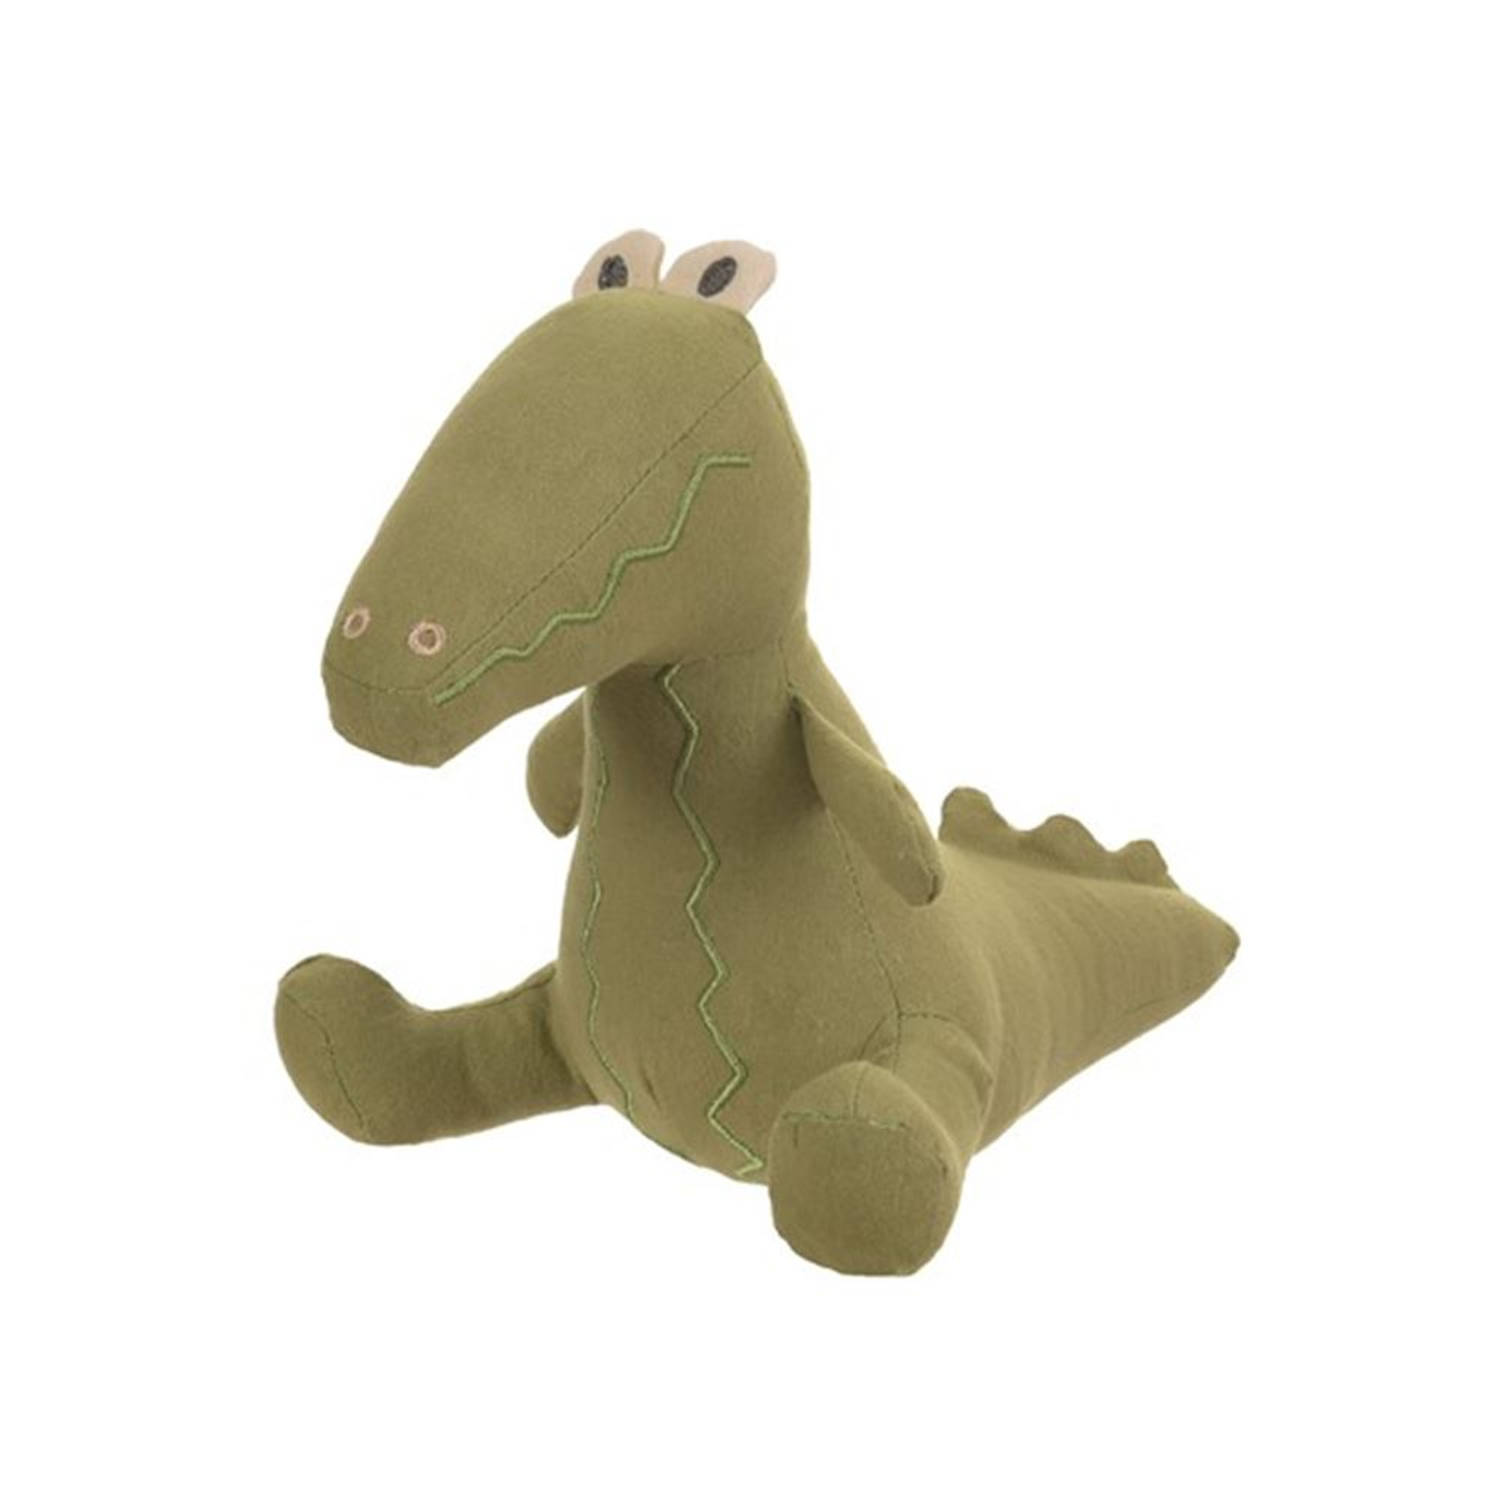 Egmont Toys knuffel krokodil Ringo